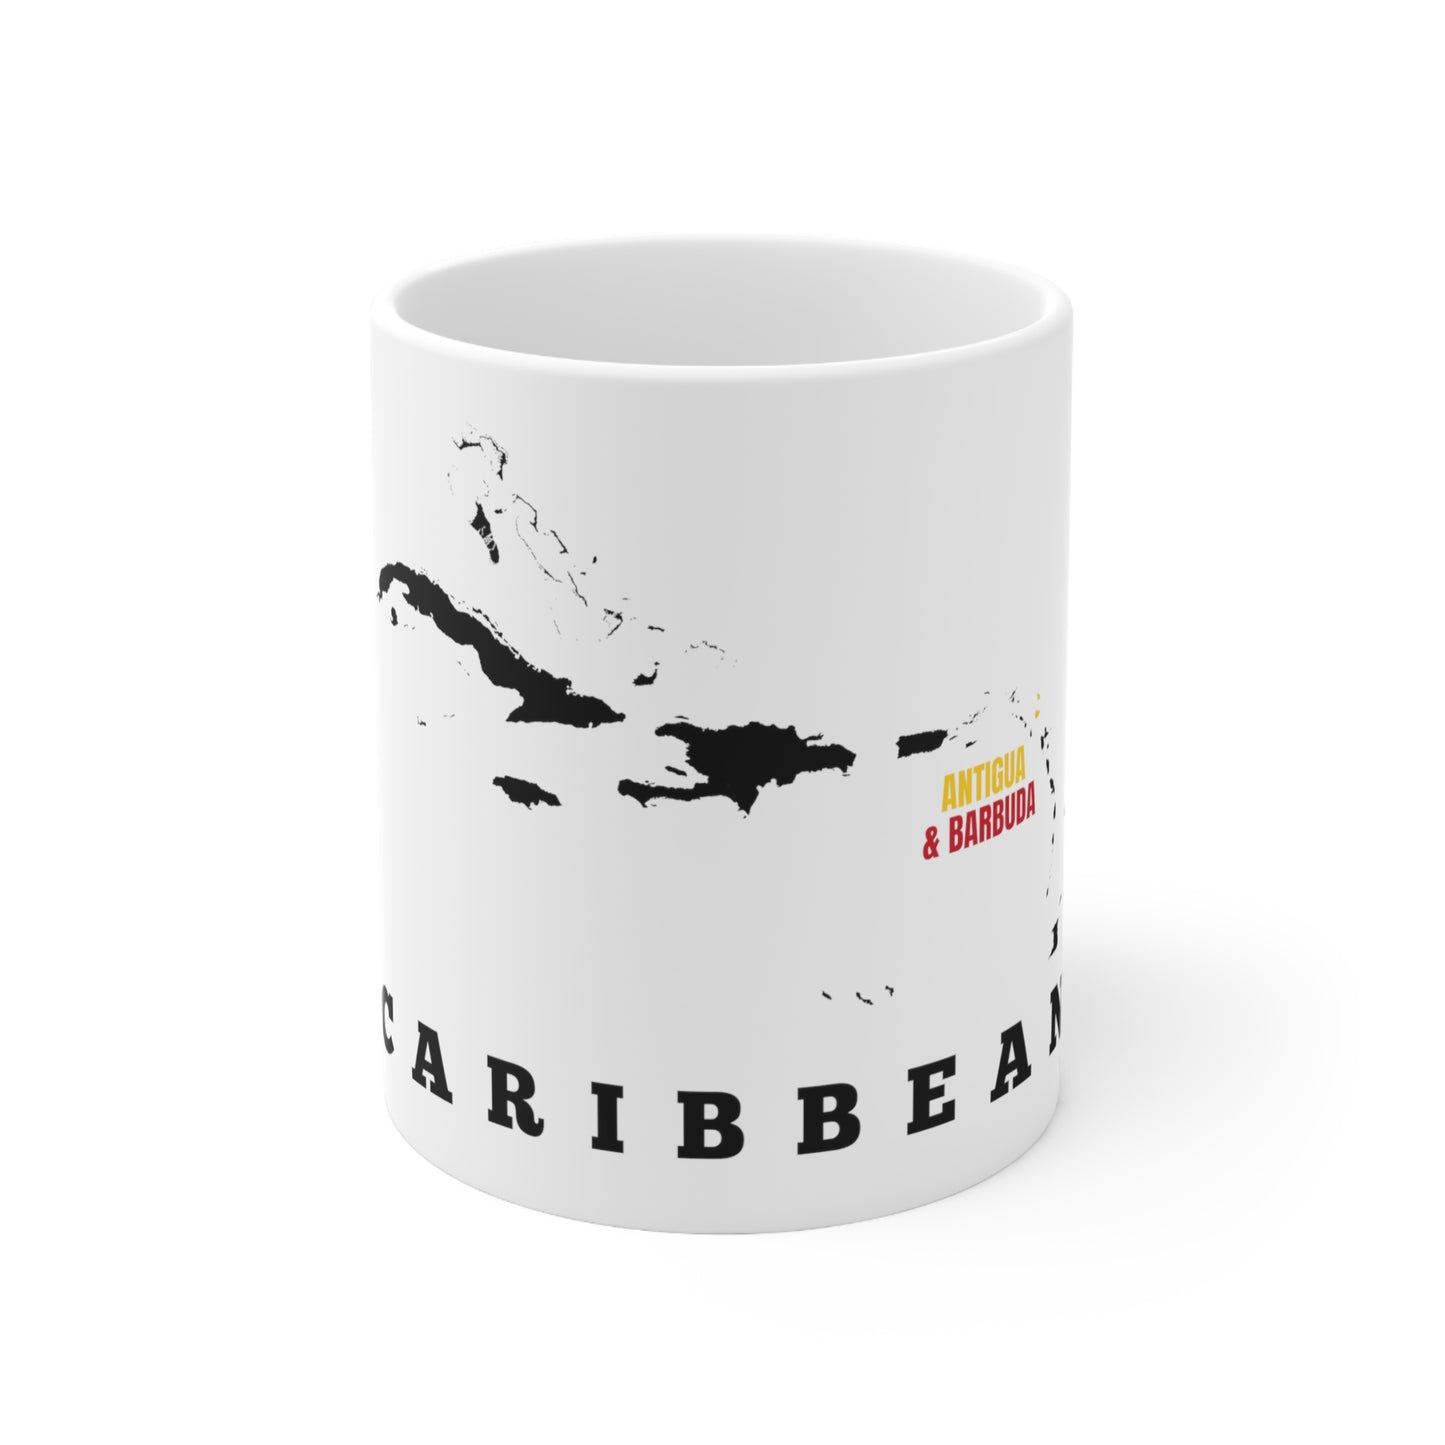 Antigua and Barbuda - Caribbean Map Ceramic Mug 11oz